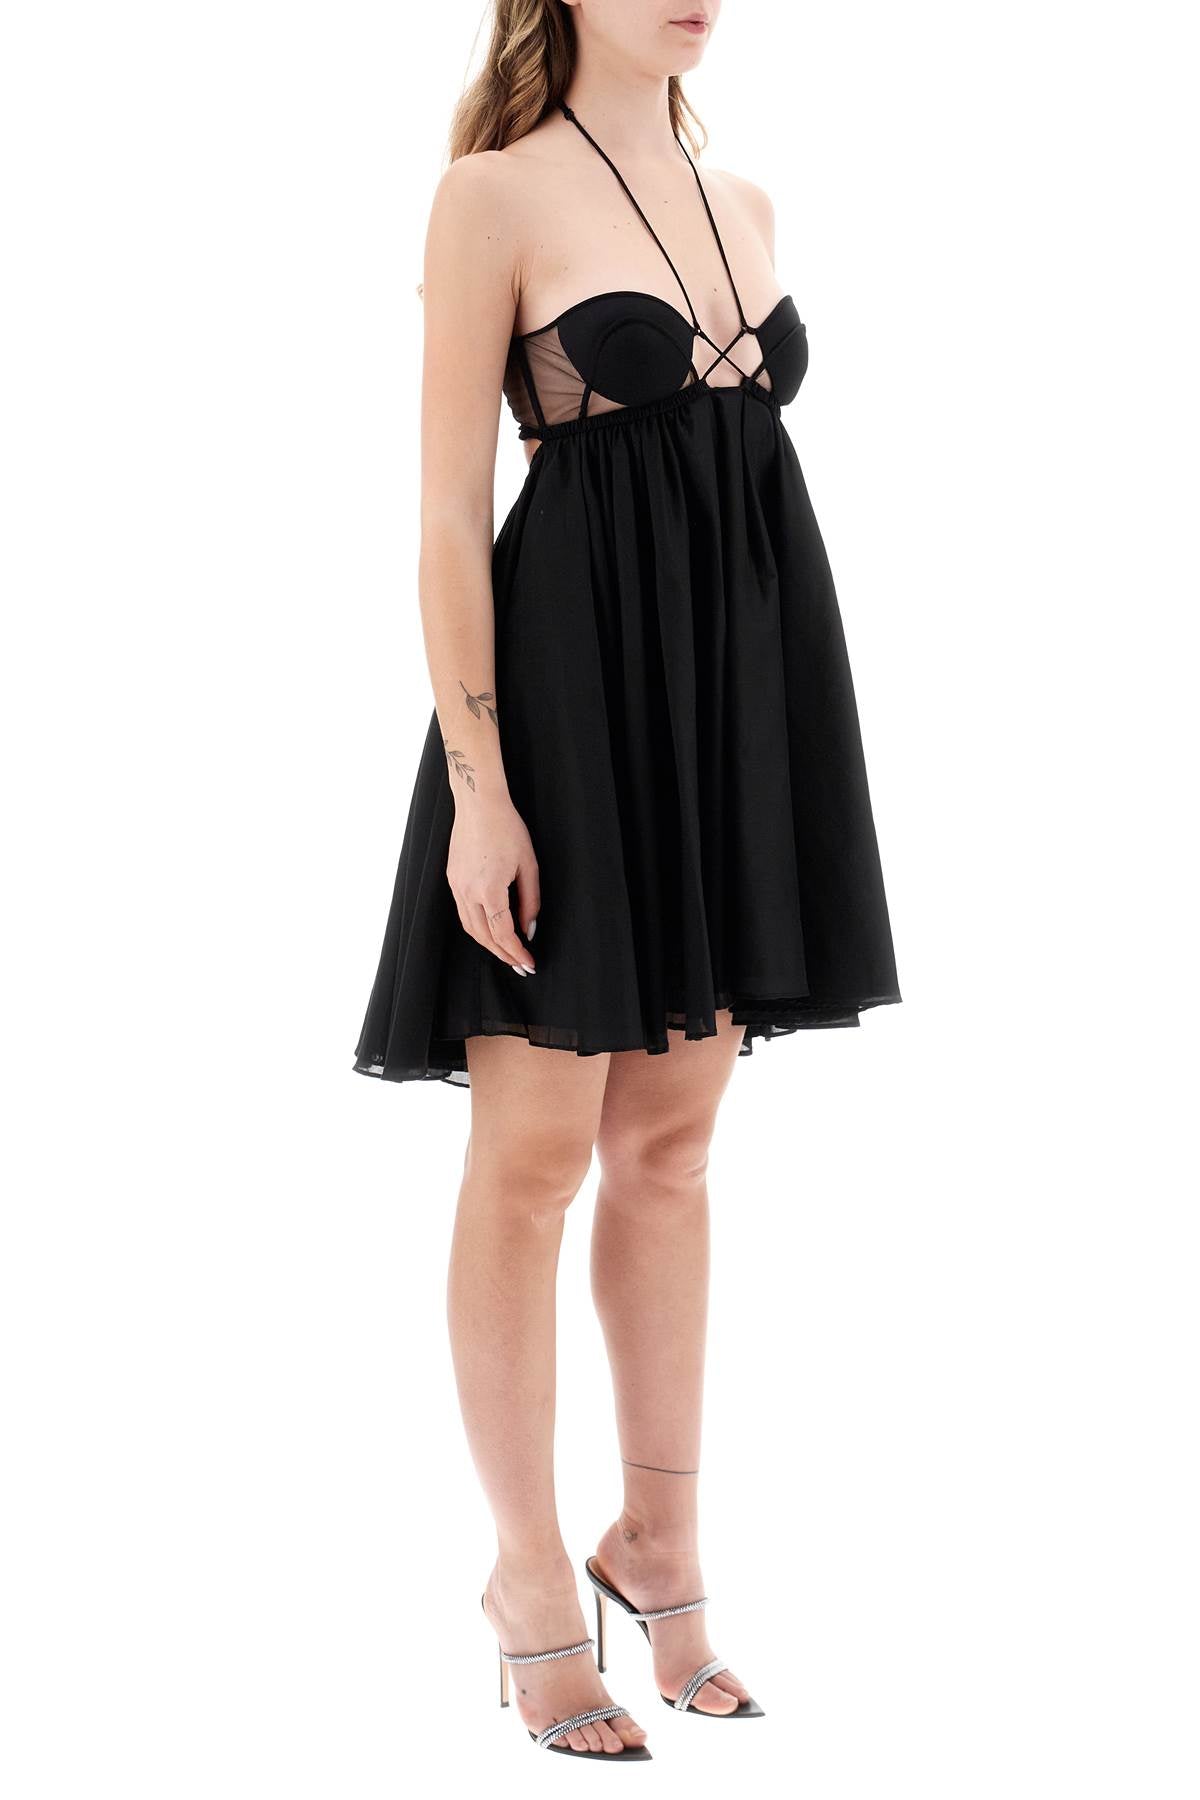 Nensi Dojaka &#39;Hilma&#39; Cotton Mini Dress Black